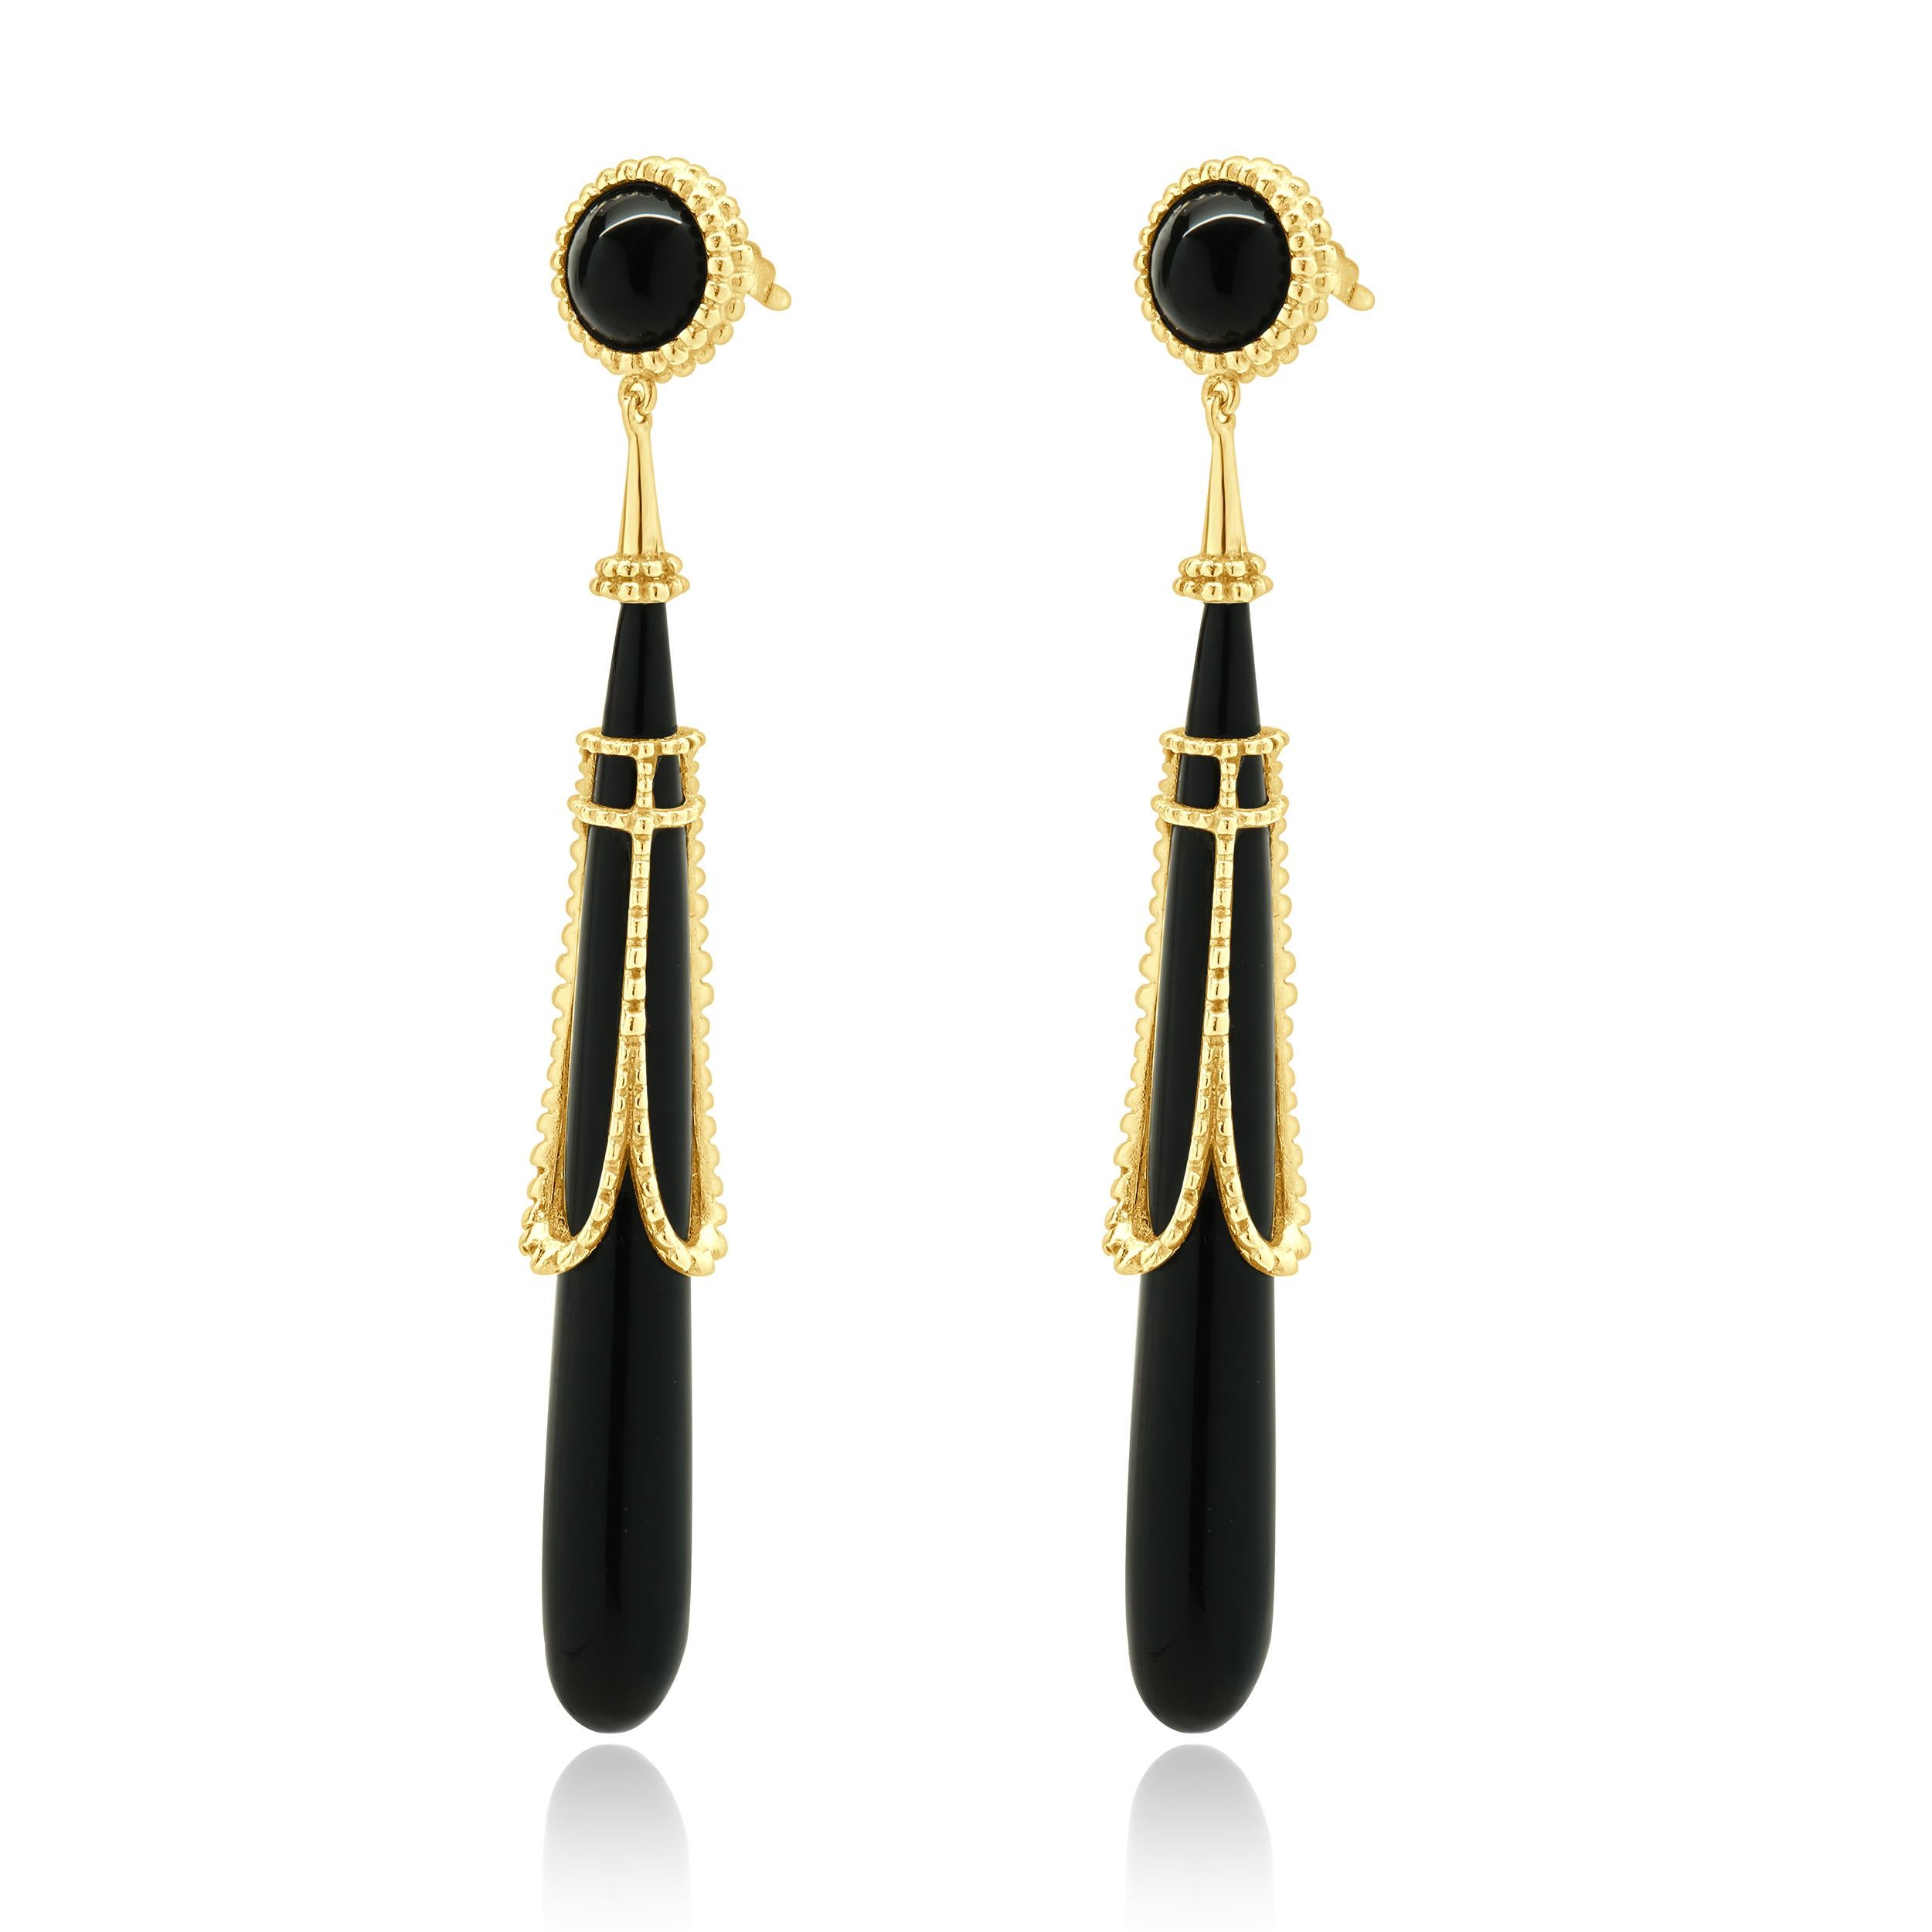 Designer: Erte Tirtoff
Material: 14K yellow gold 
Dimensions: earrings measure 79mm in length
Weight: 17.90 grams